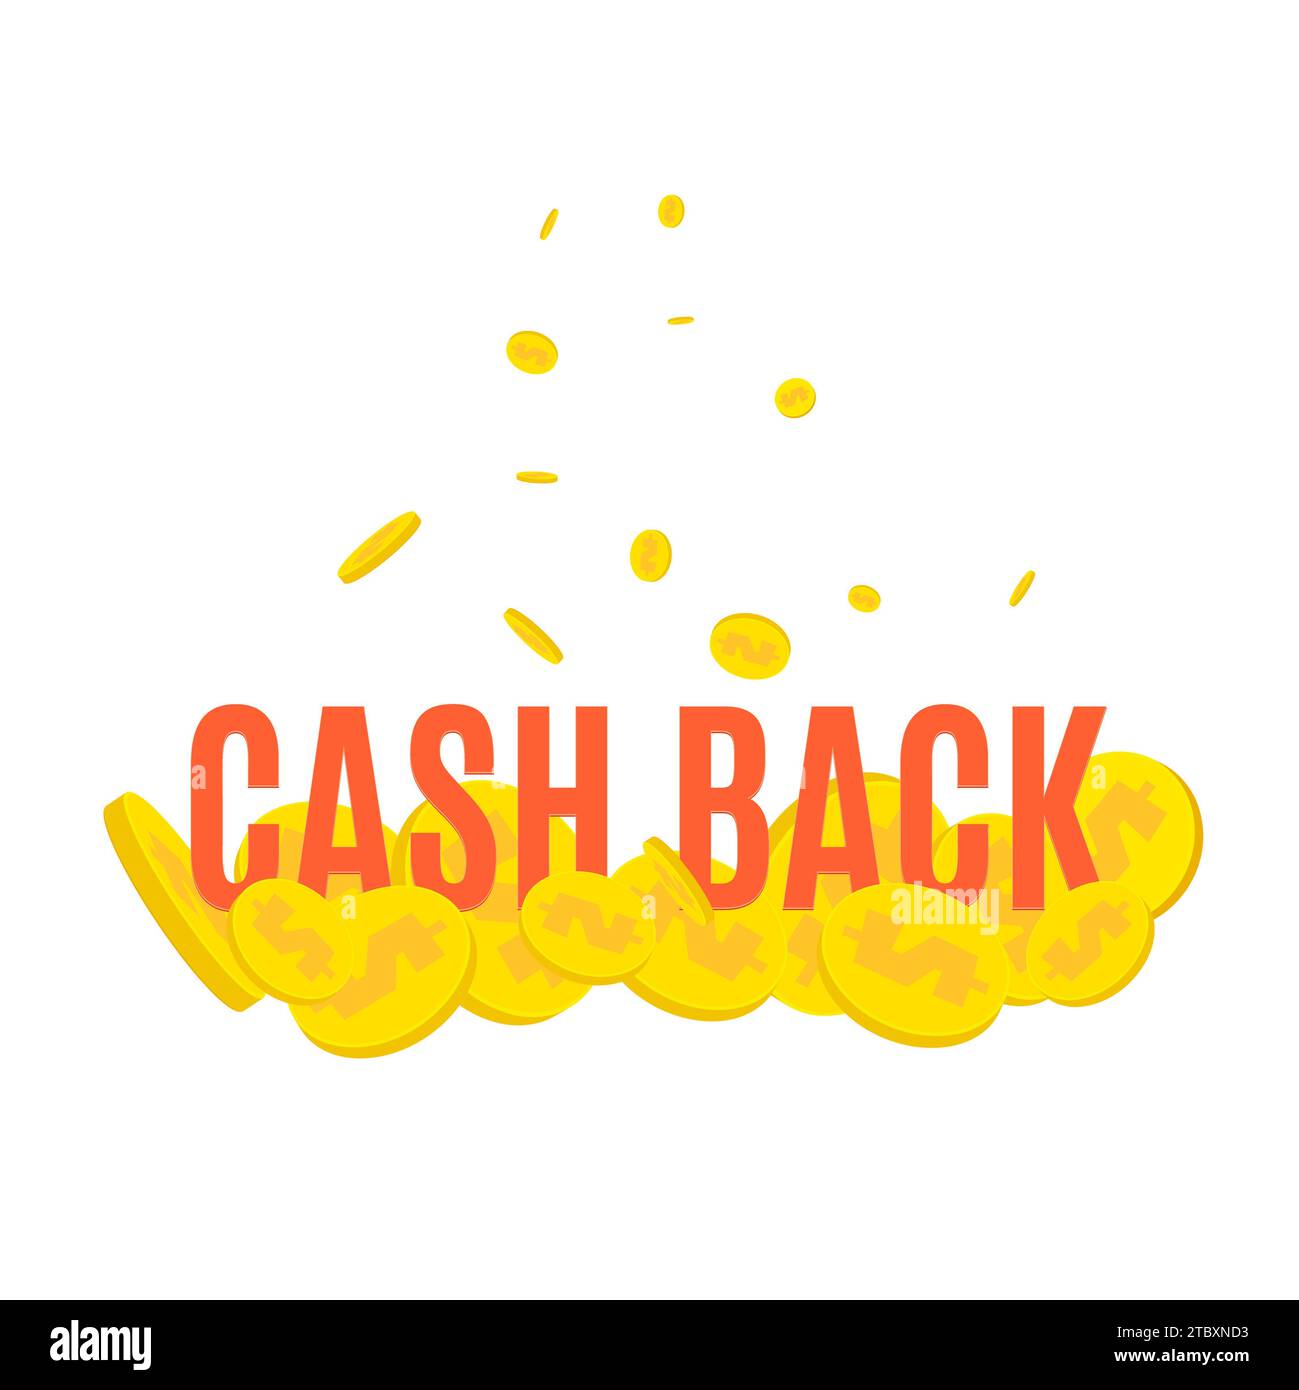 Cashback, konzeptionelle Illustration Stockfoto